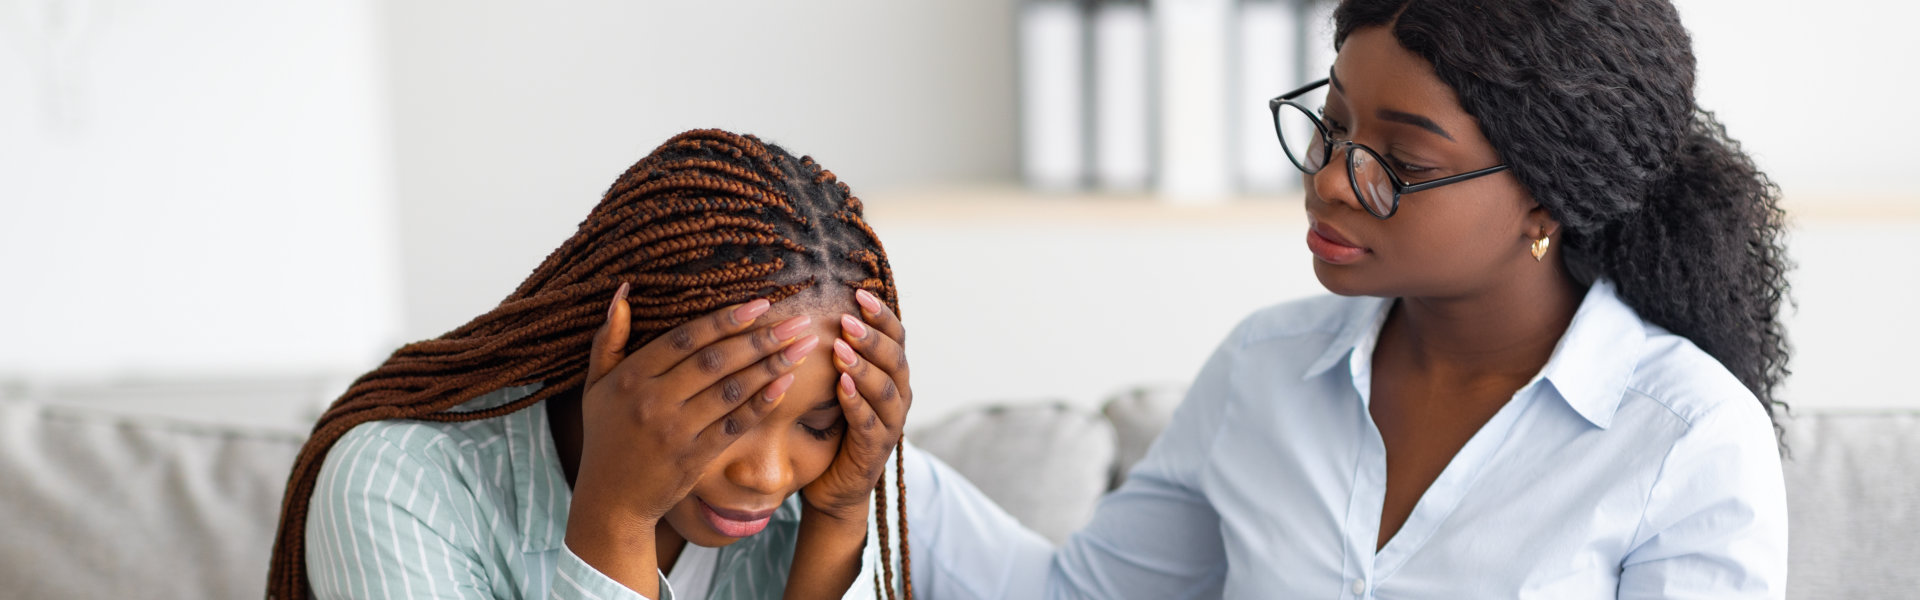 psychotherapist comforting depressed female patient